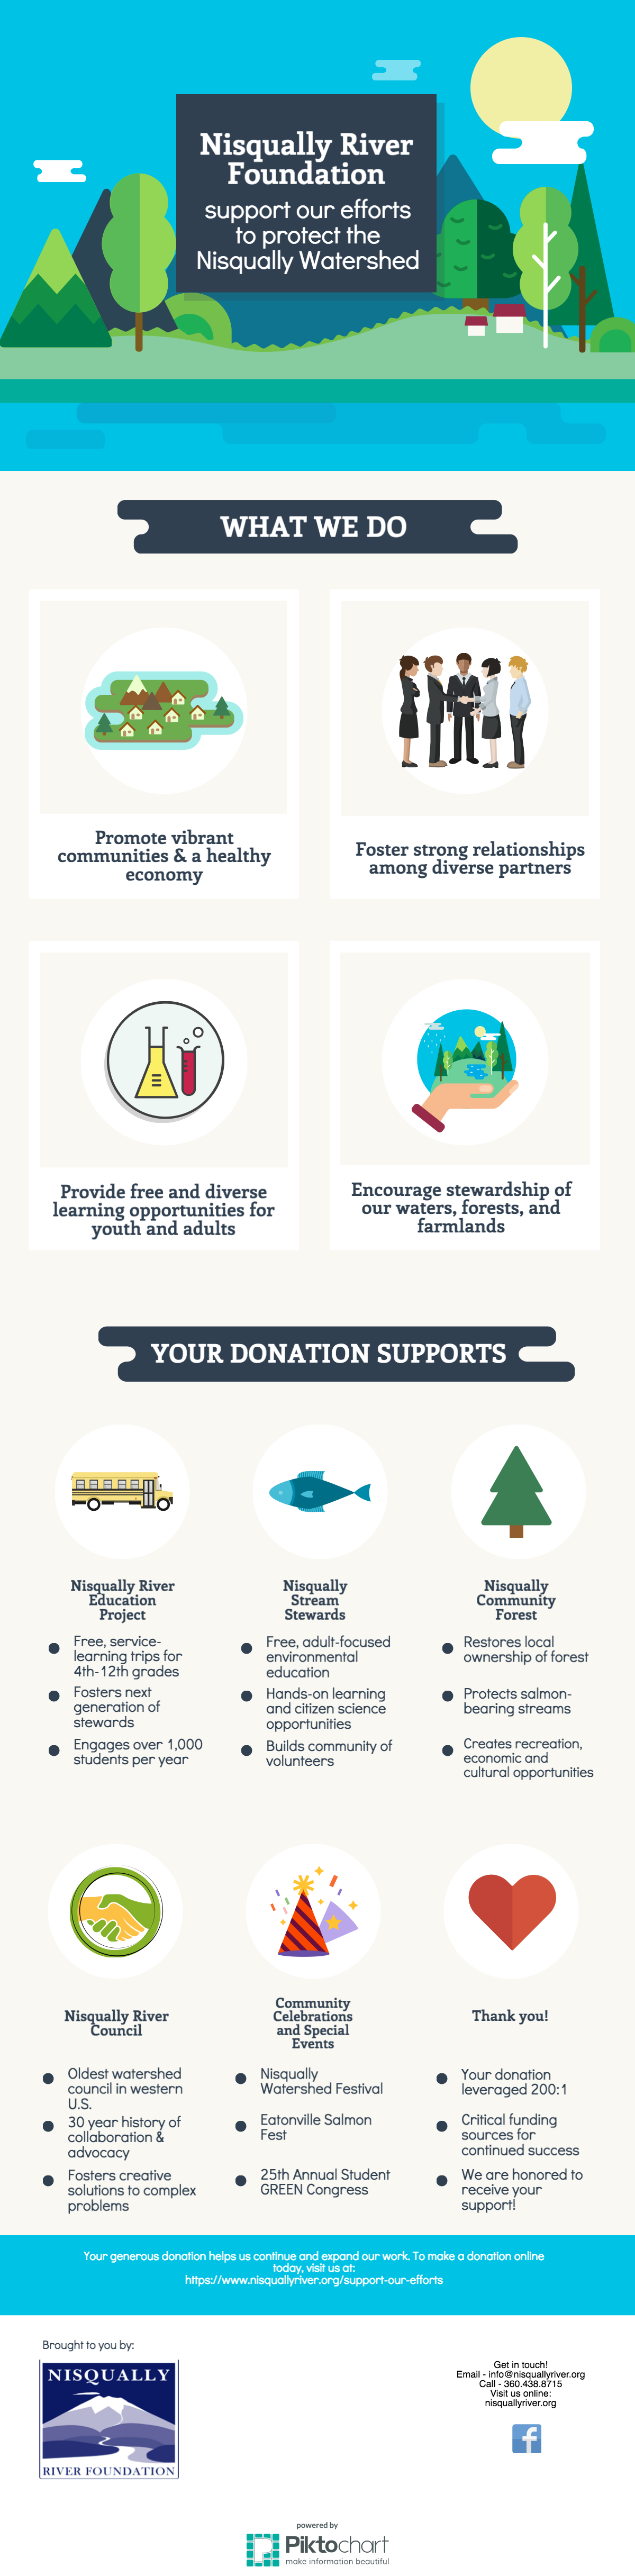 nrf-donation-infographic